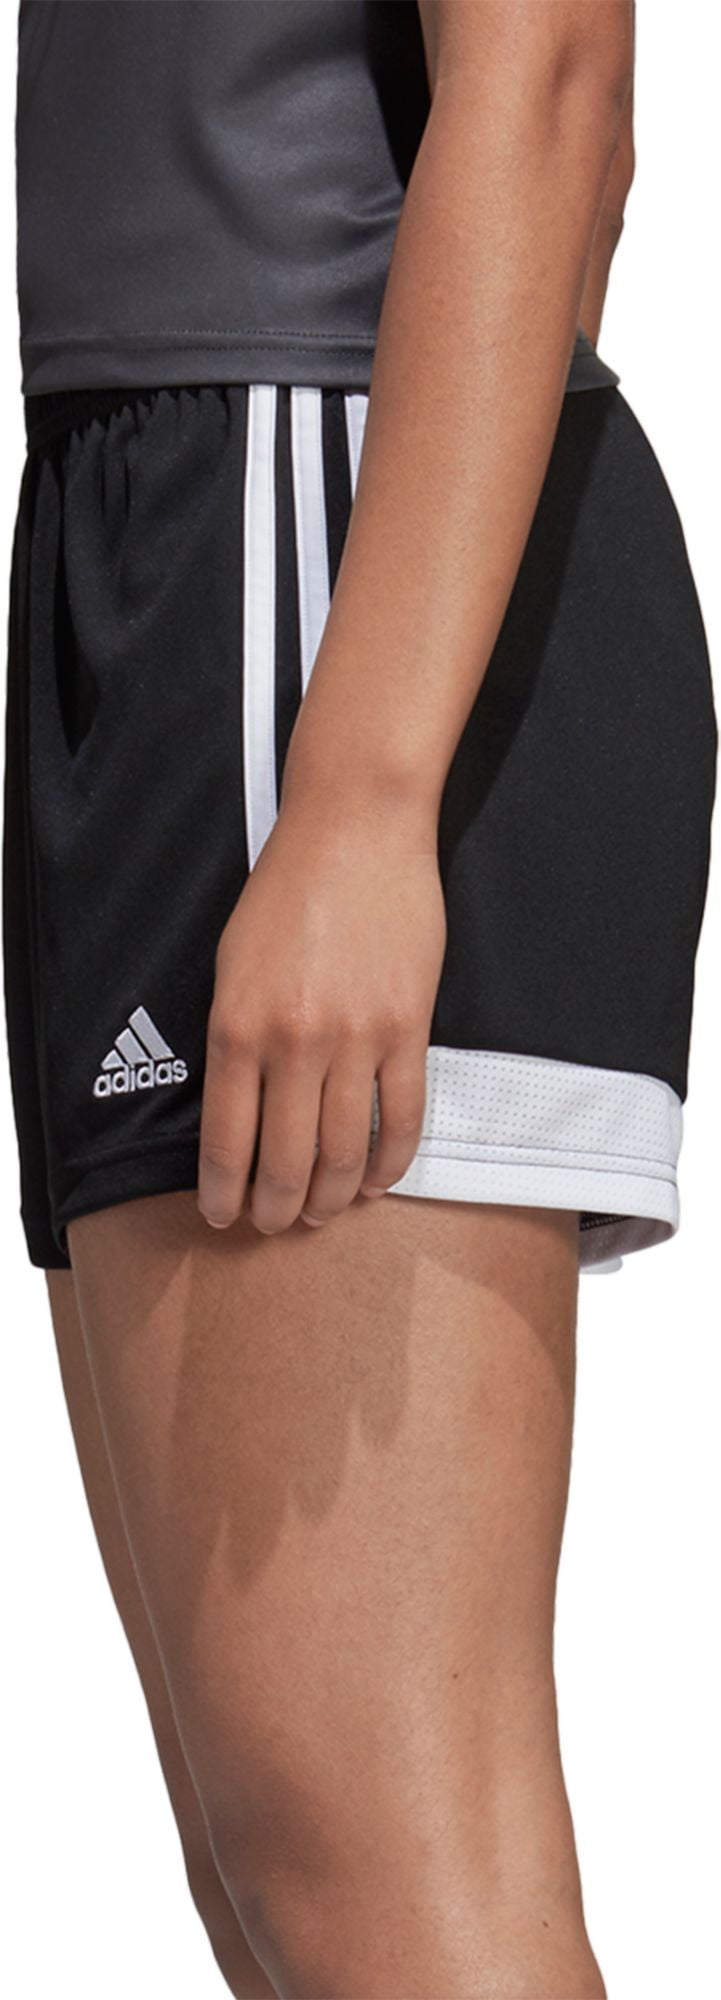 adidas climalite womens soccer shorts